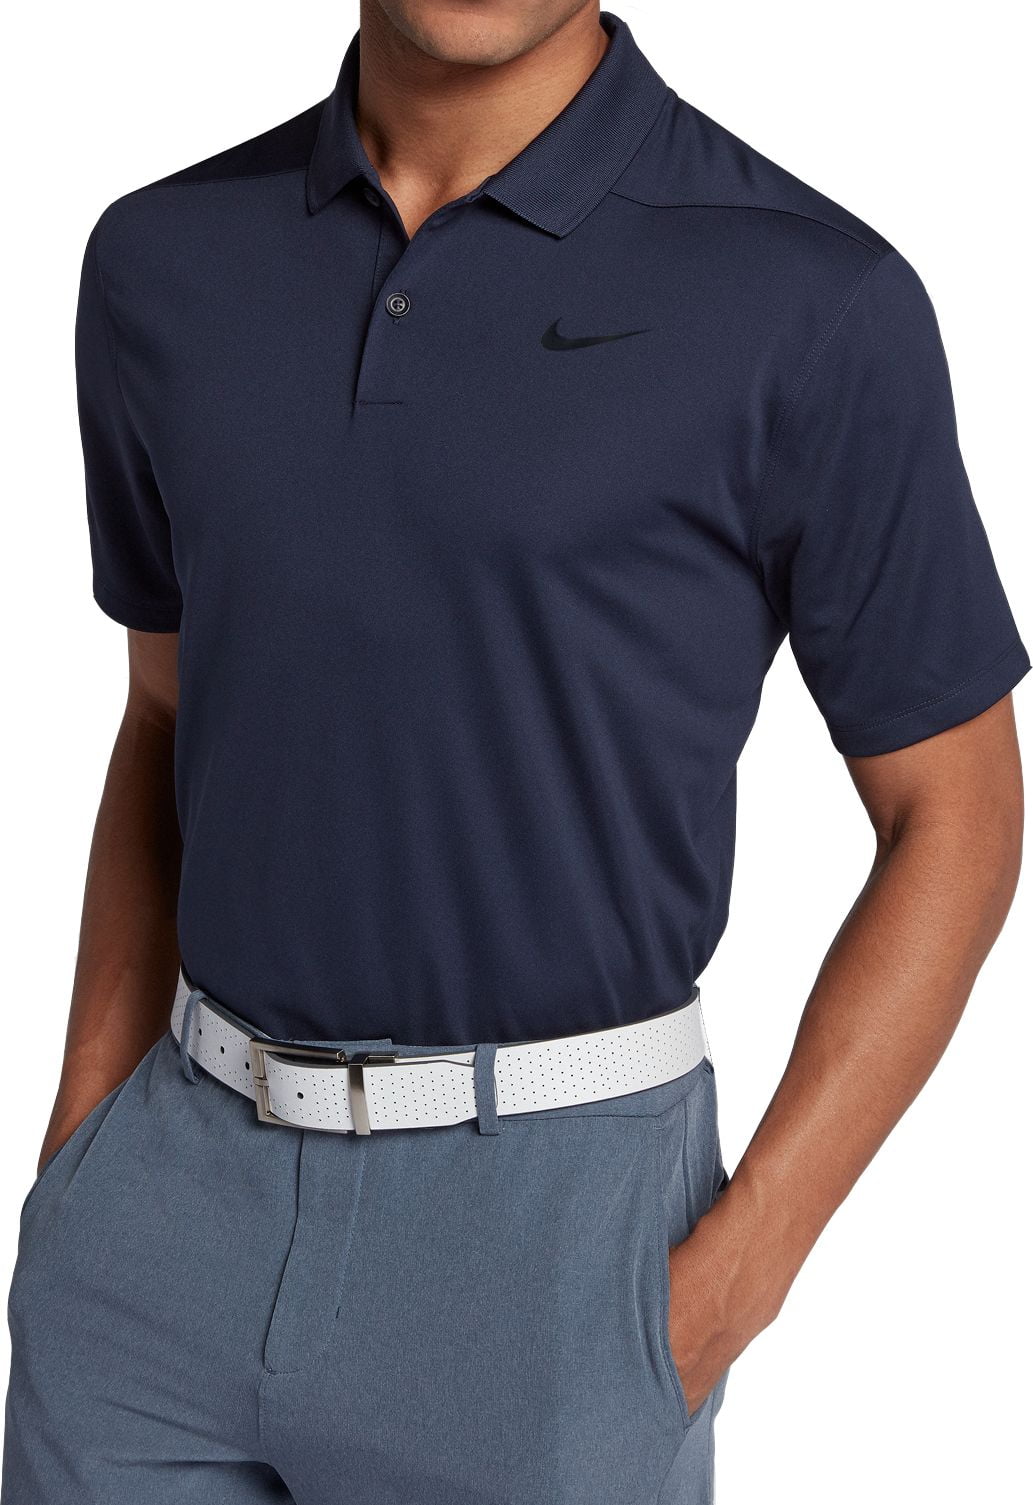 Nike Men's Solid Dry Victory Golf Polo - Walmart.com